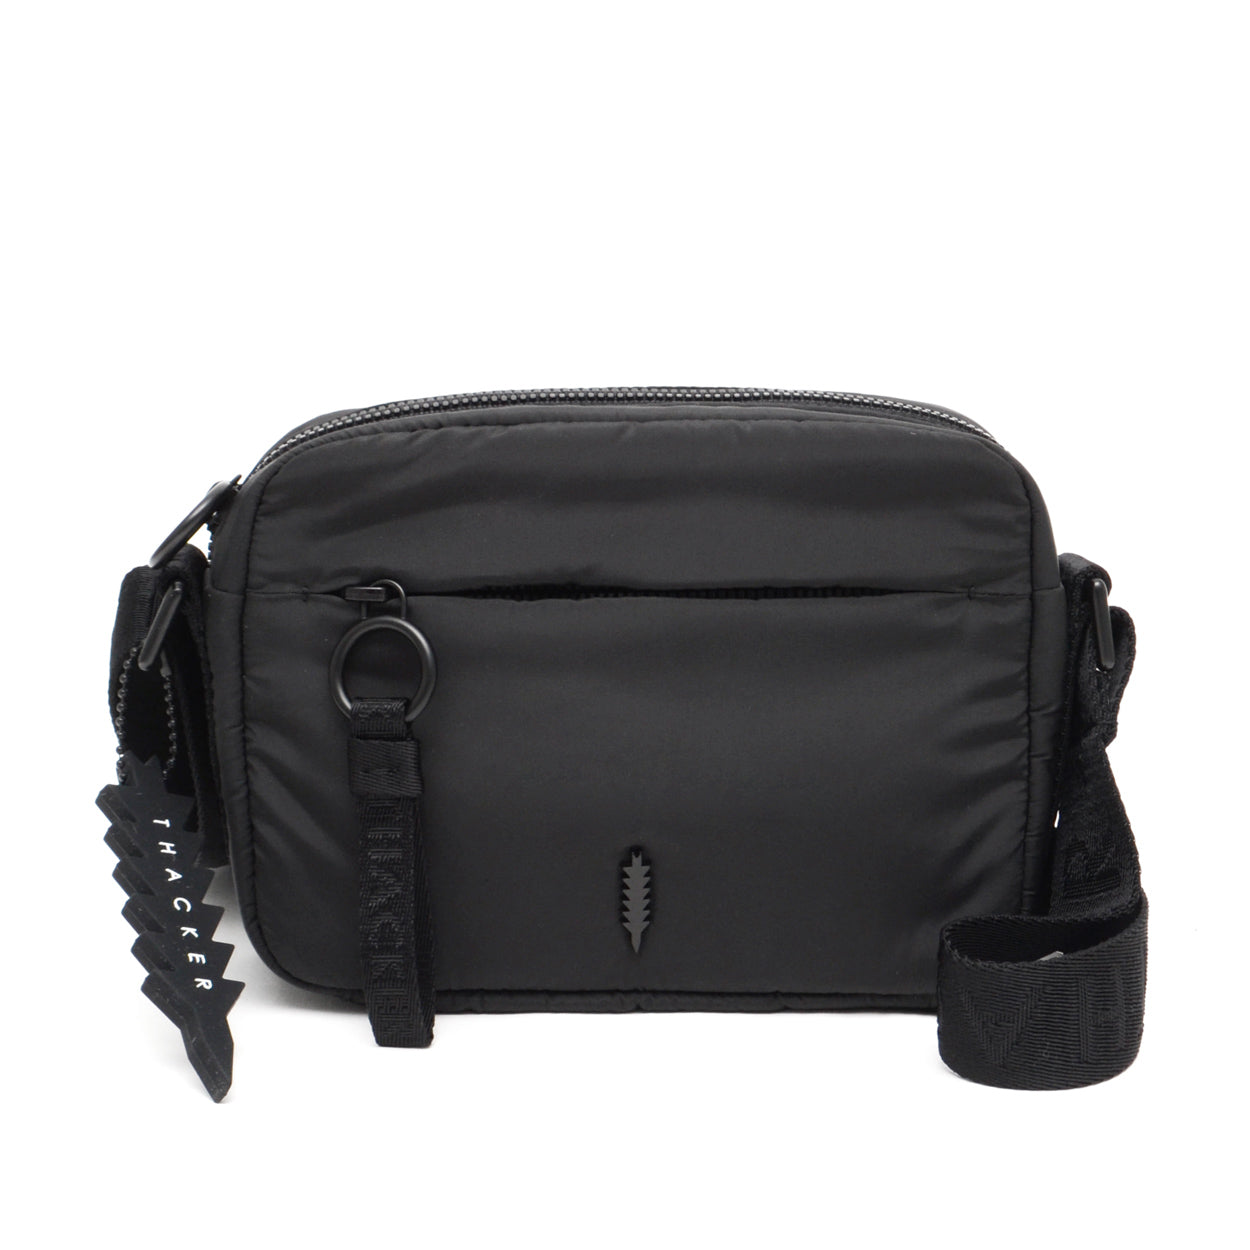 Feather camera bag | Black Nylon